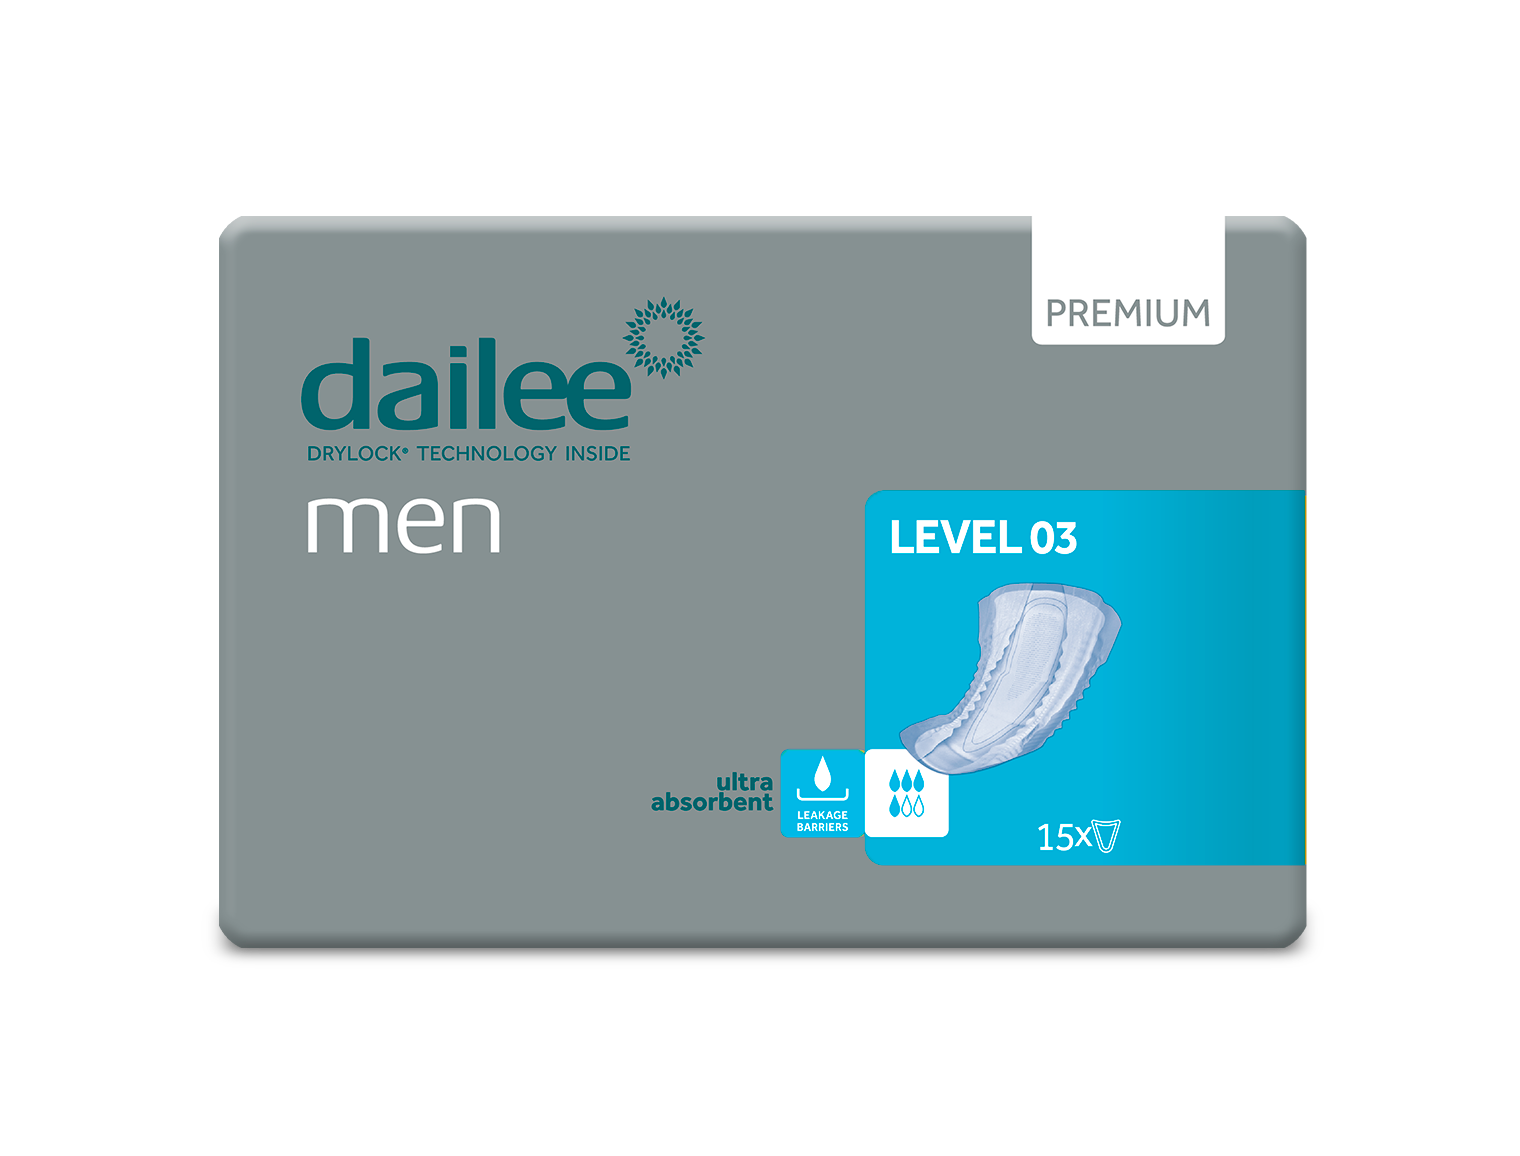 dailee_men_premium_level_03_thumb